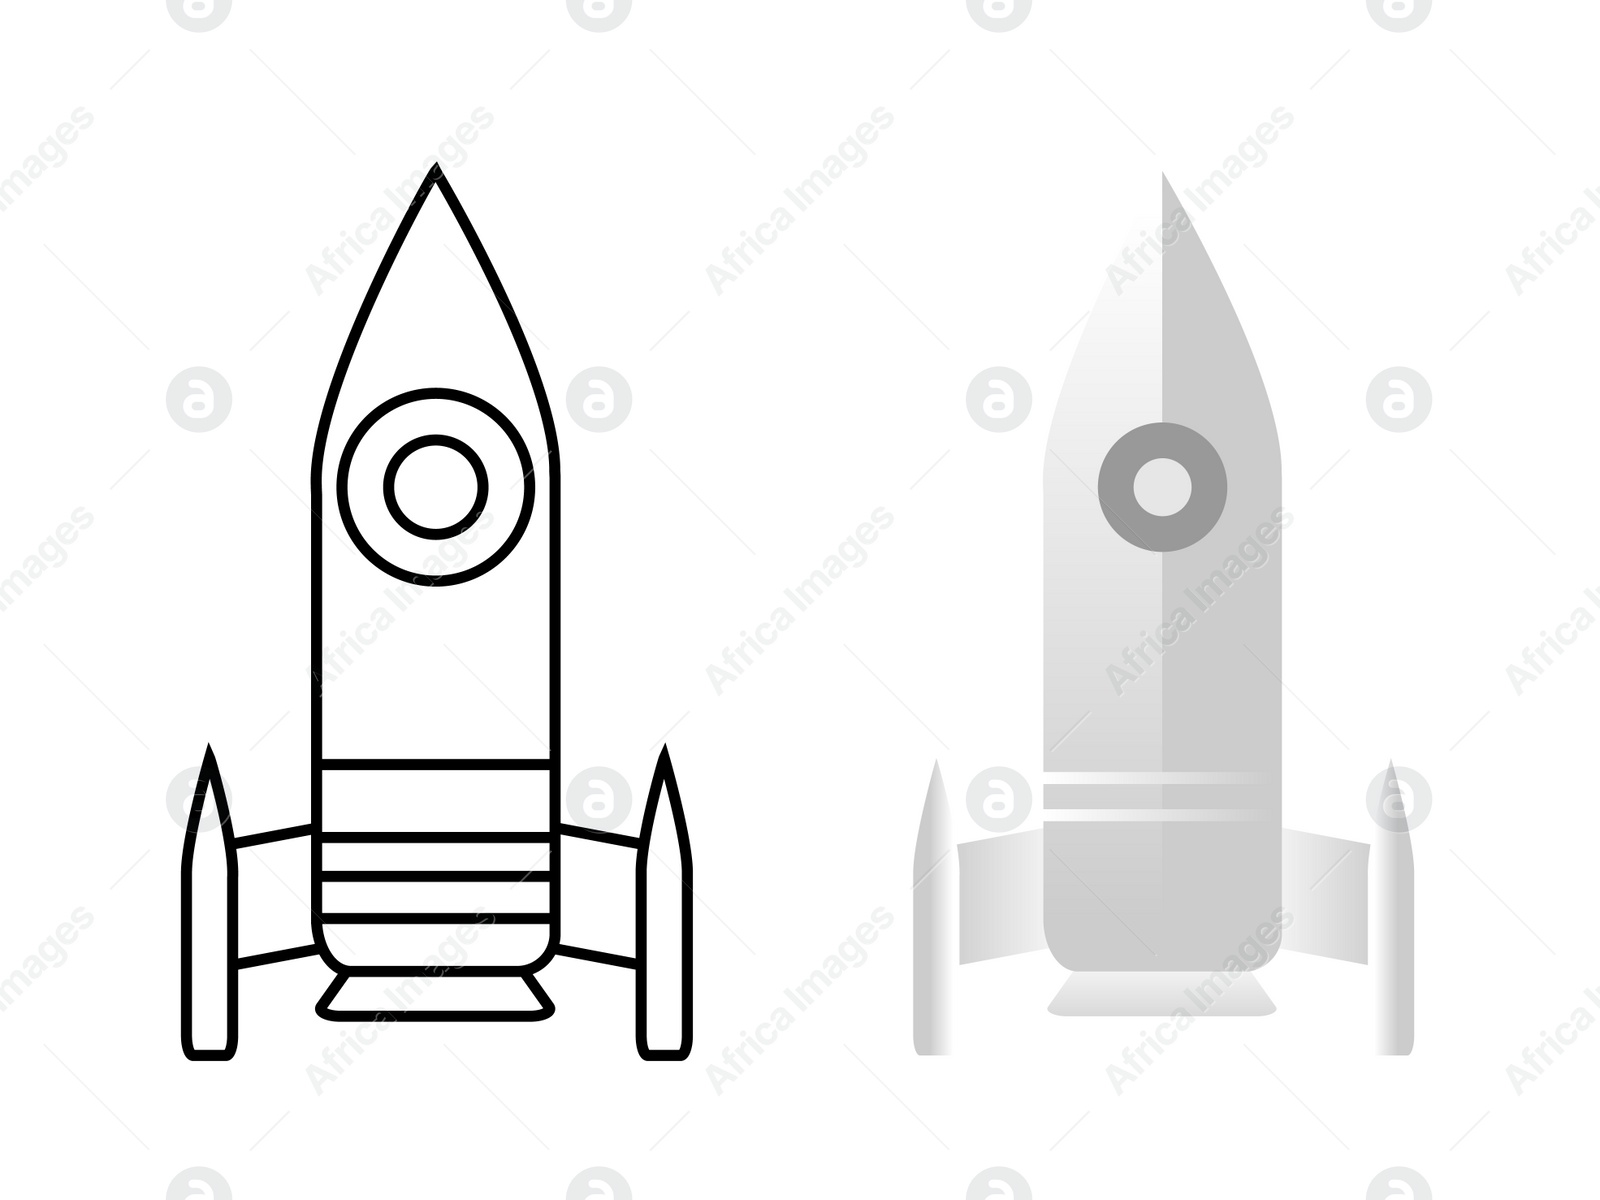 Illustration of Modern rocket model illustrations on white background